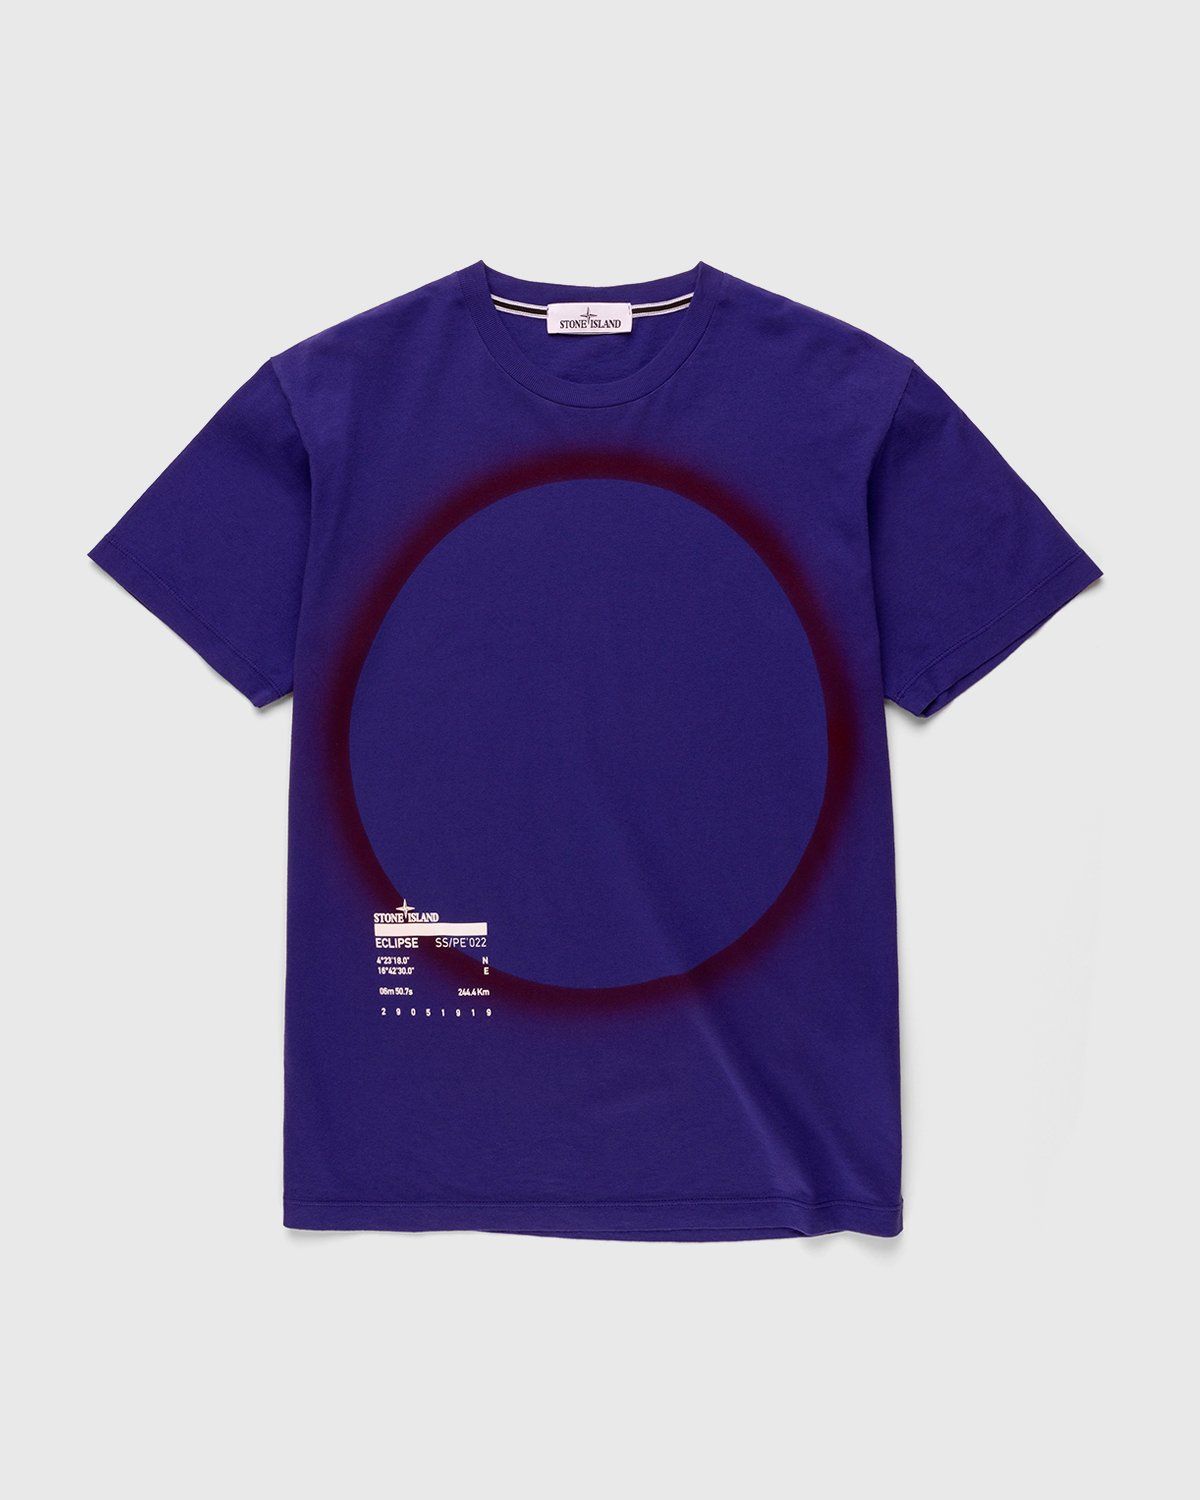 Stone Island – 2NS95 Garment-Dyed Solar Eclipse One T-Shirt Bright Blue - Image 1